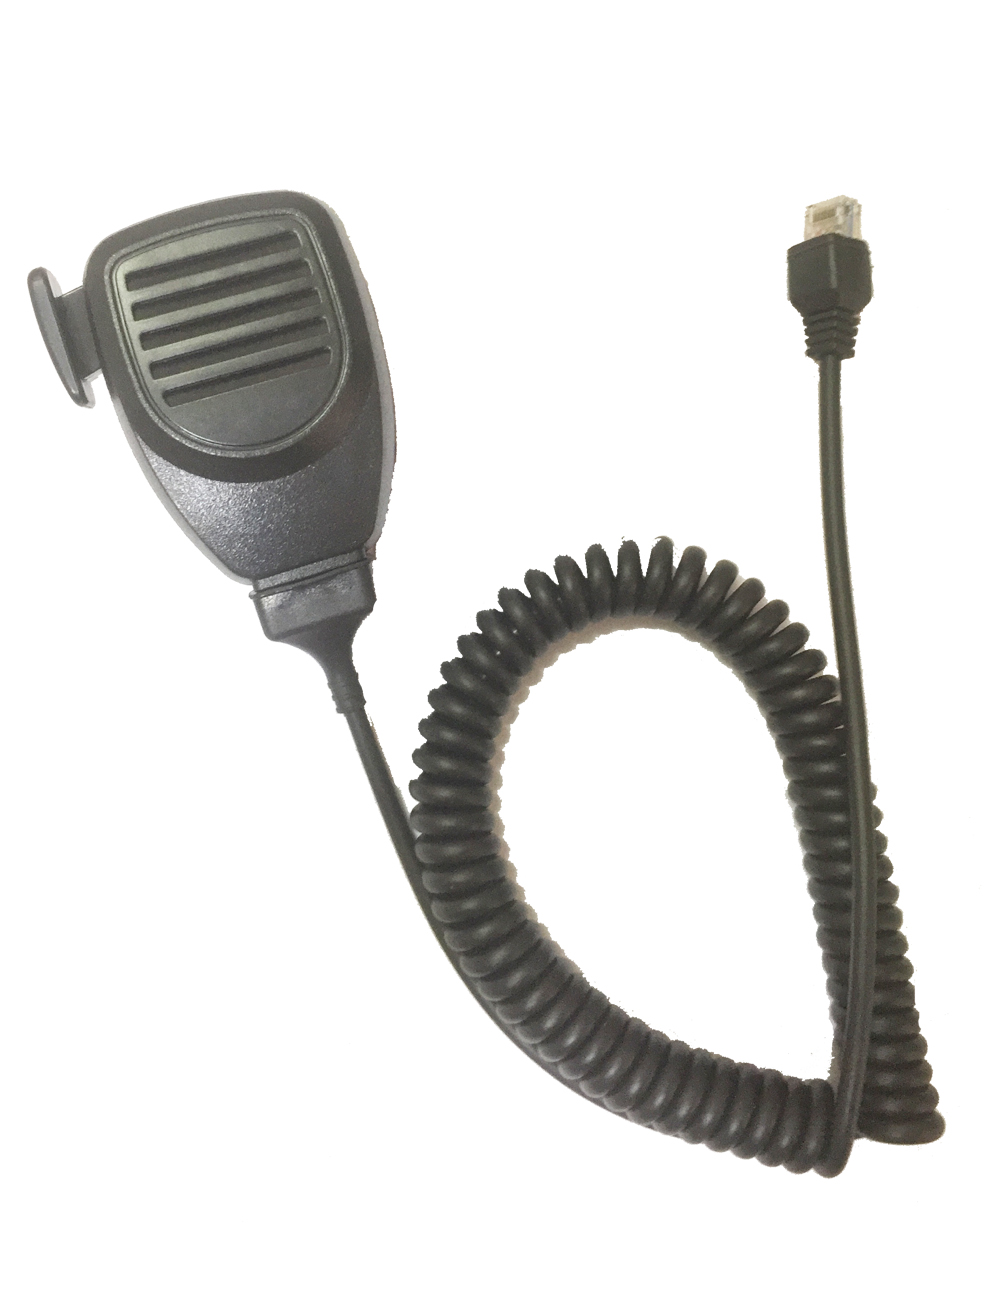 Standard Speaker Microphone CTG-30 for Kenwood Radio